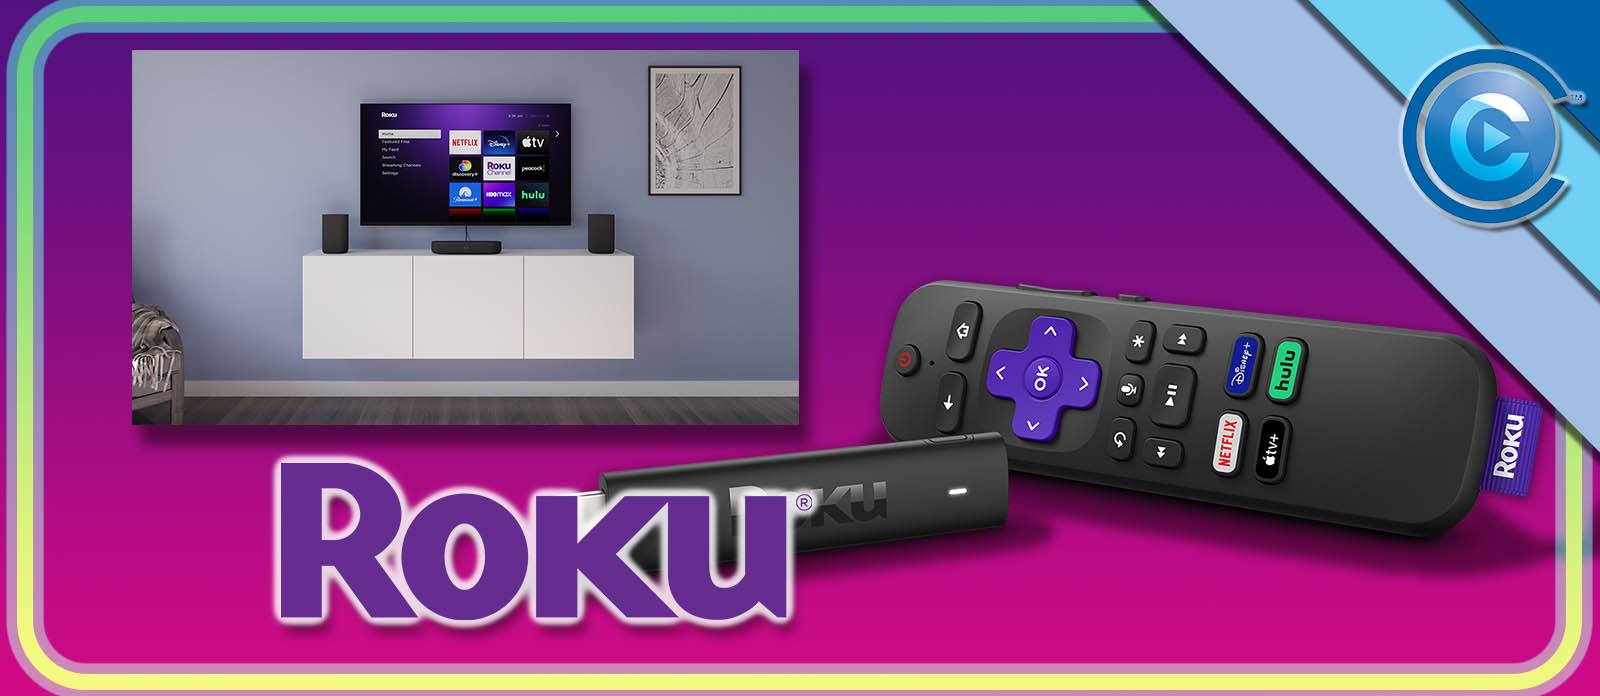 Video: Roku’s Fall 2021: Roku OS 10.5, Streaming Stick 4K, and More